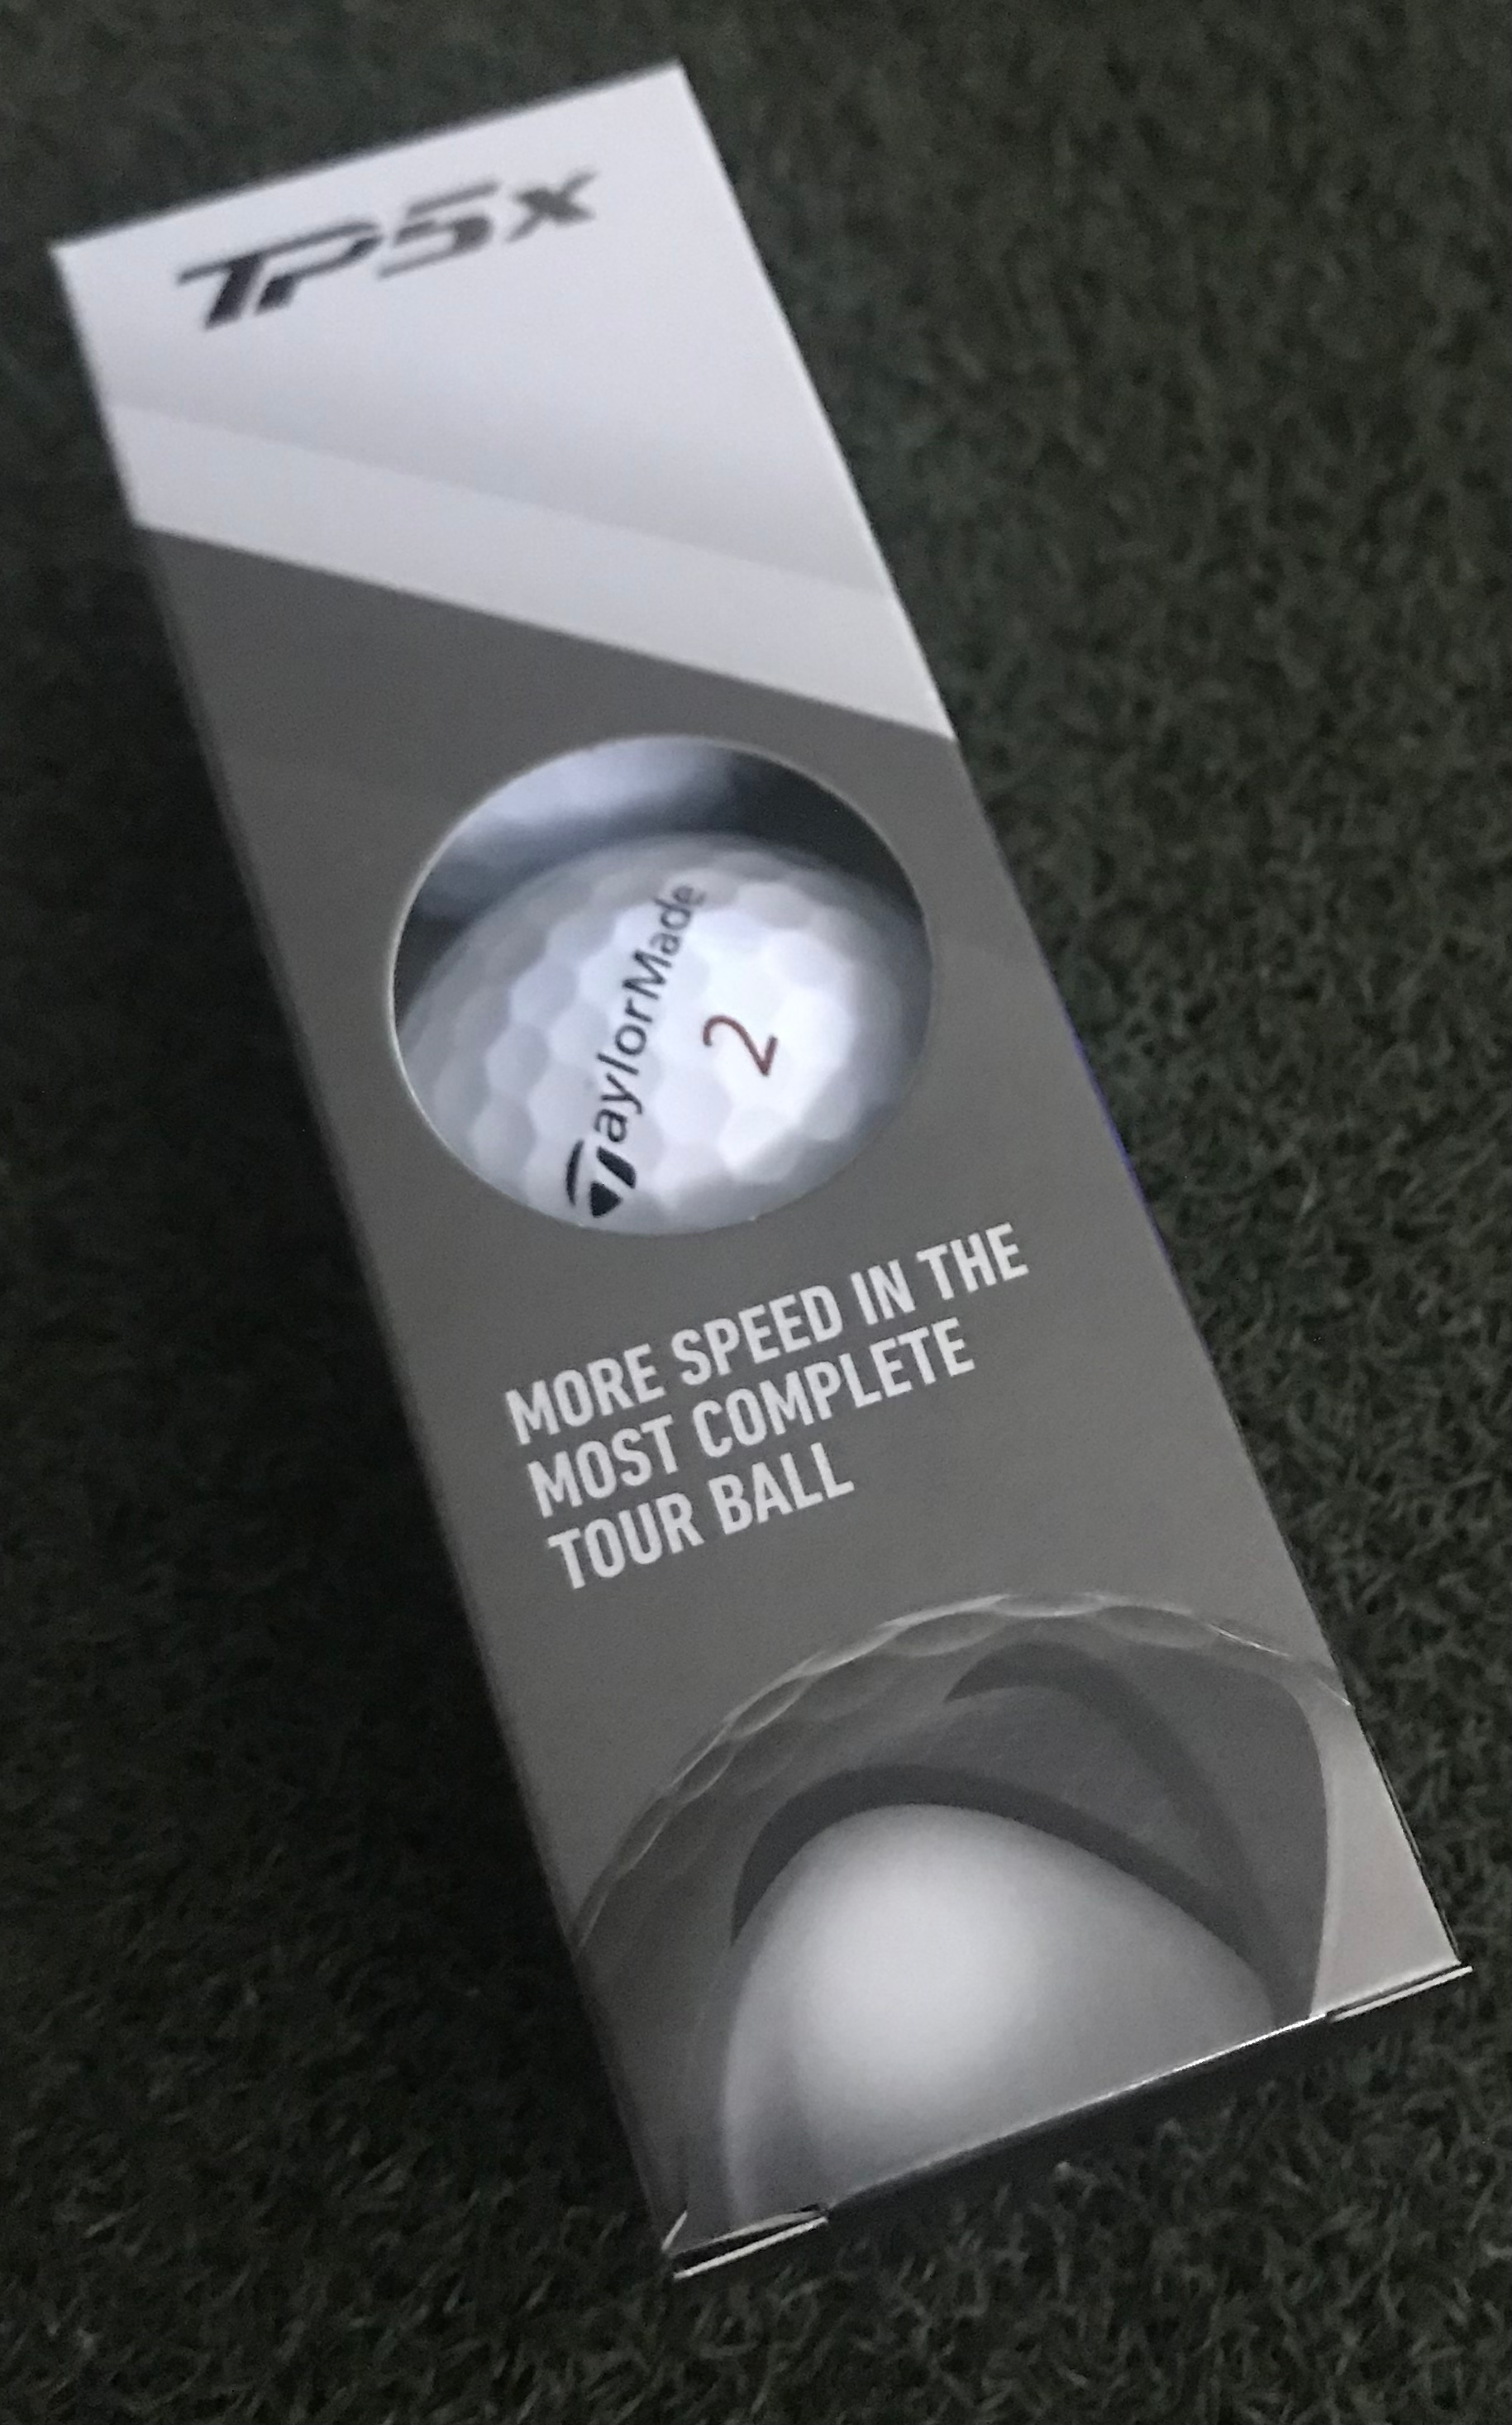 Taylor Made TP5x Golf Balls Sleeve – ClubsAndSticks